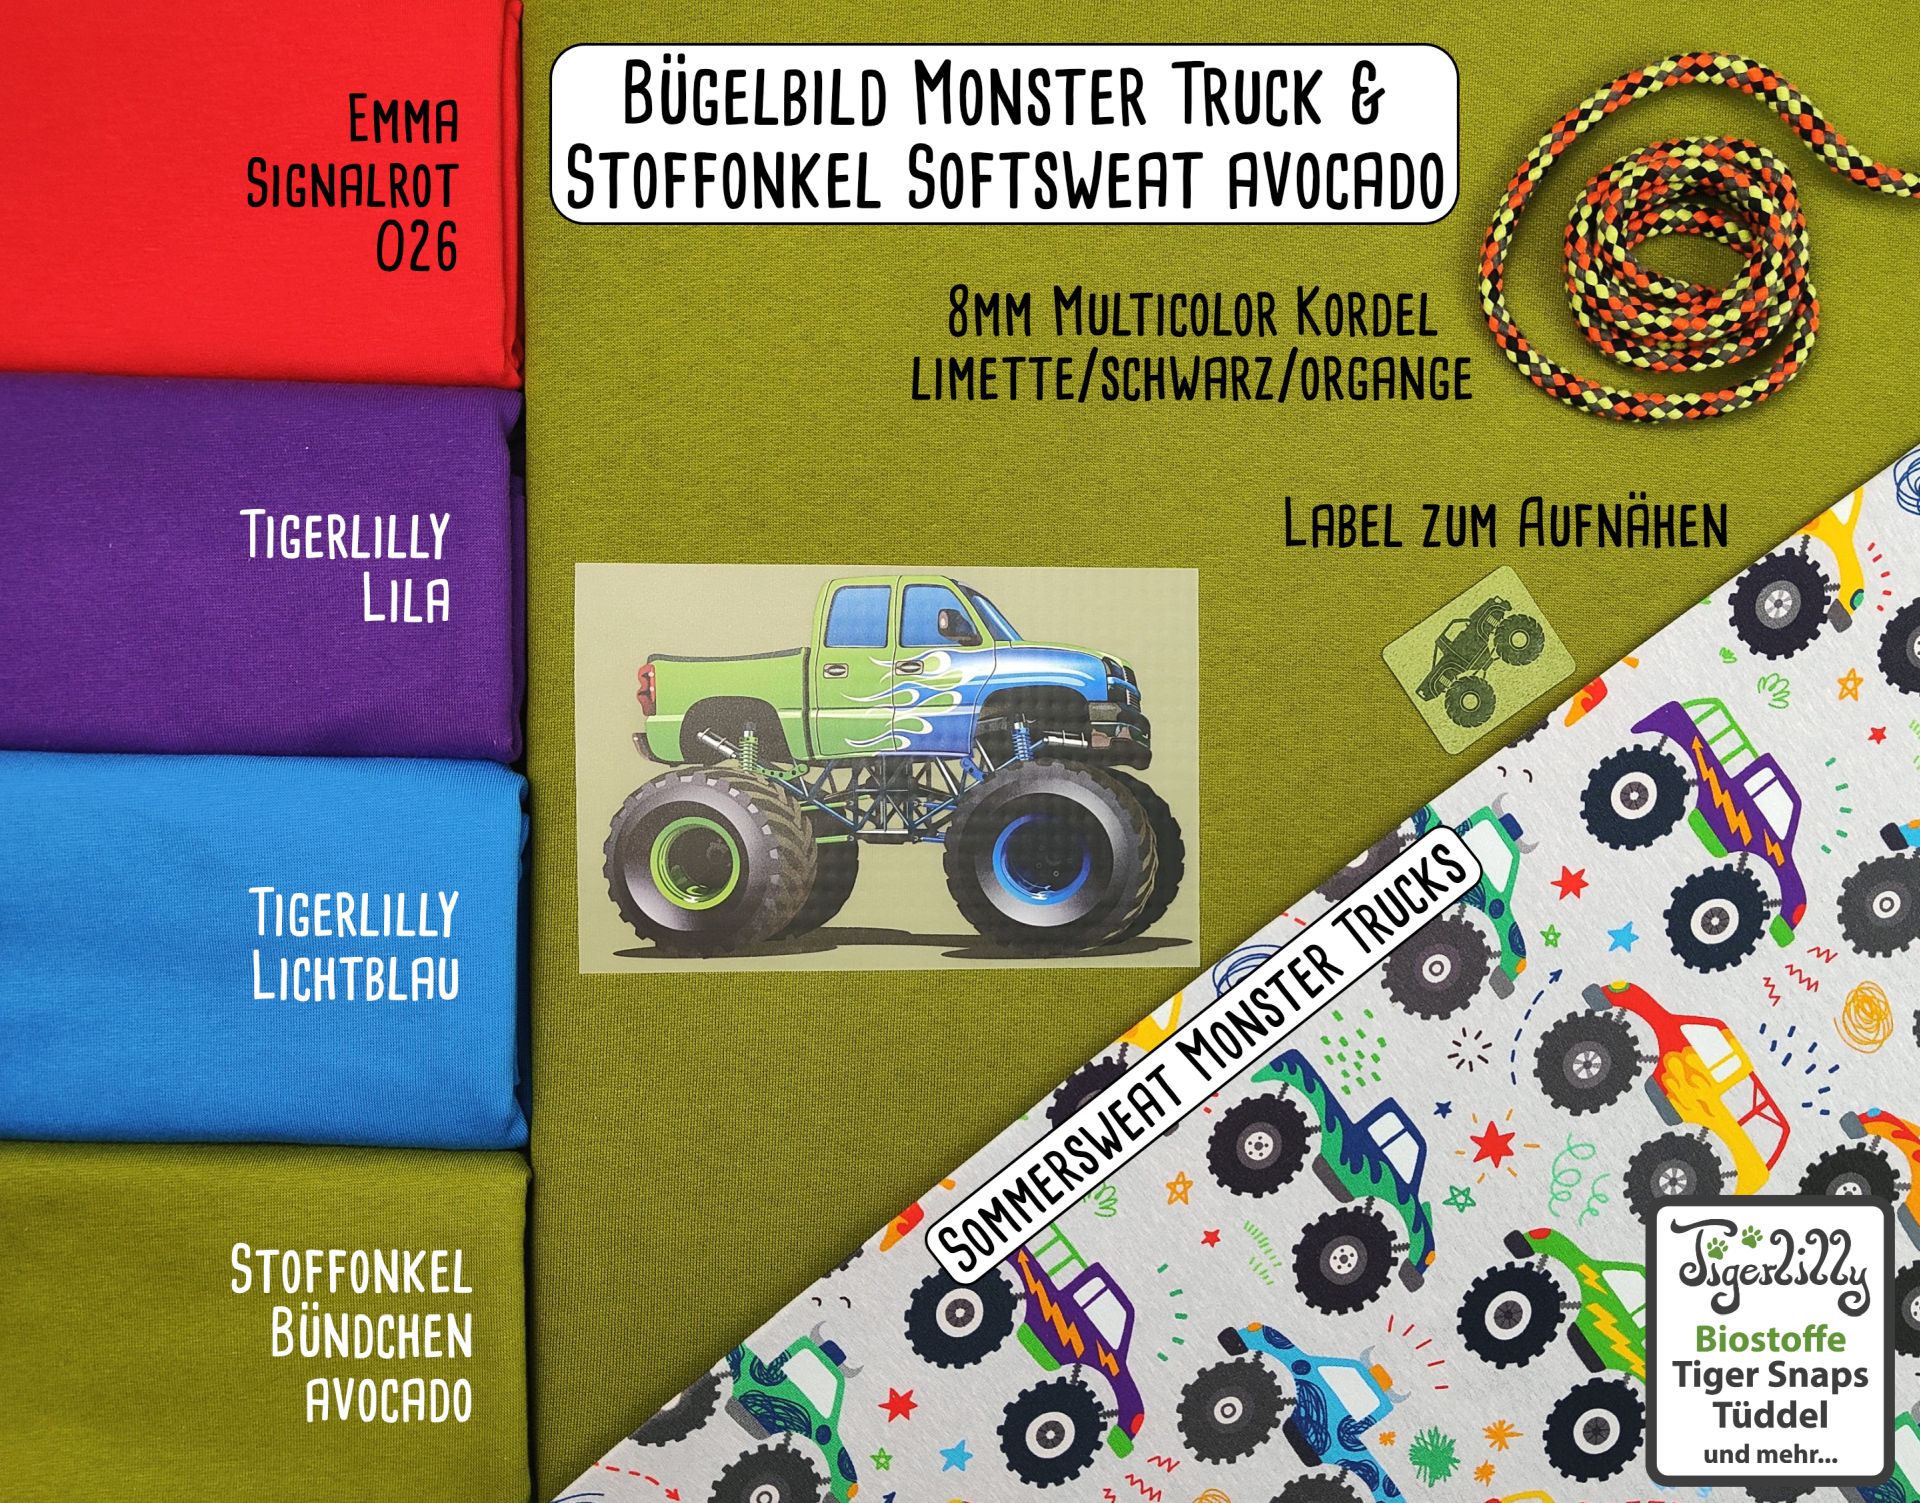 Bügelbild Monster Truck